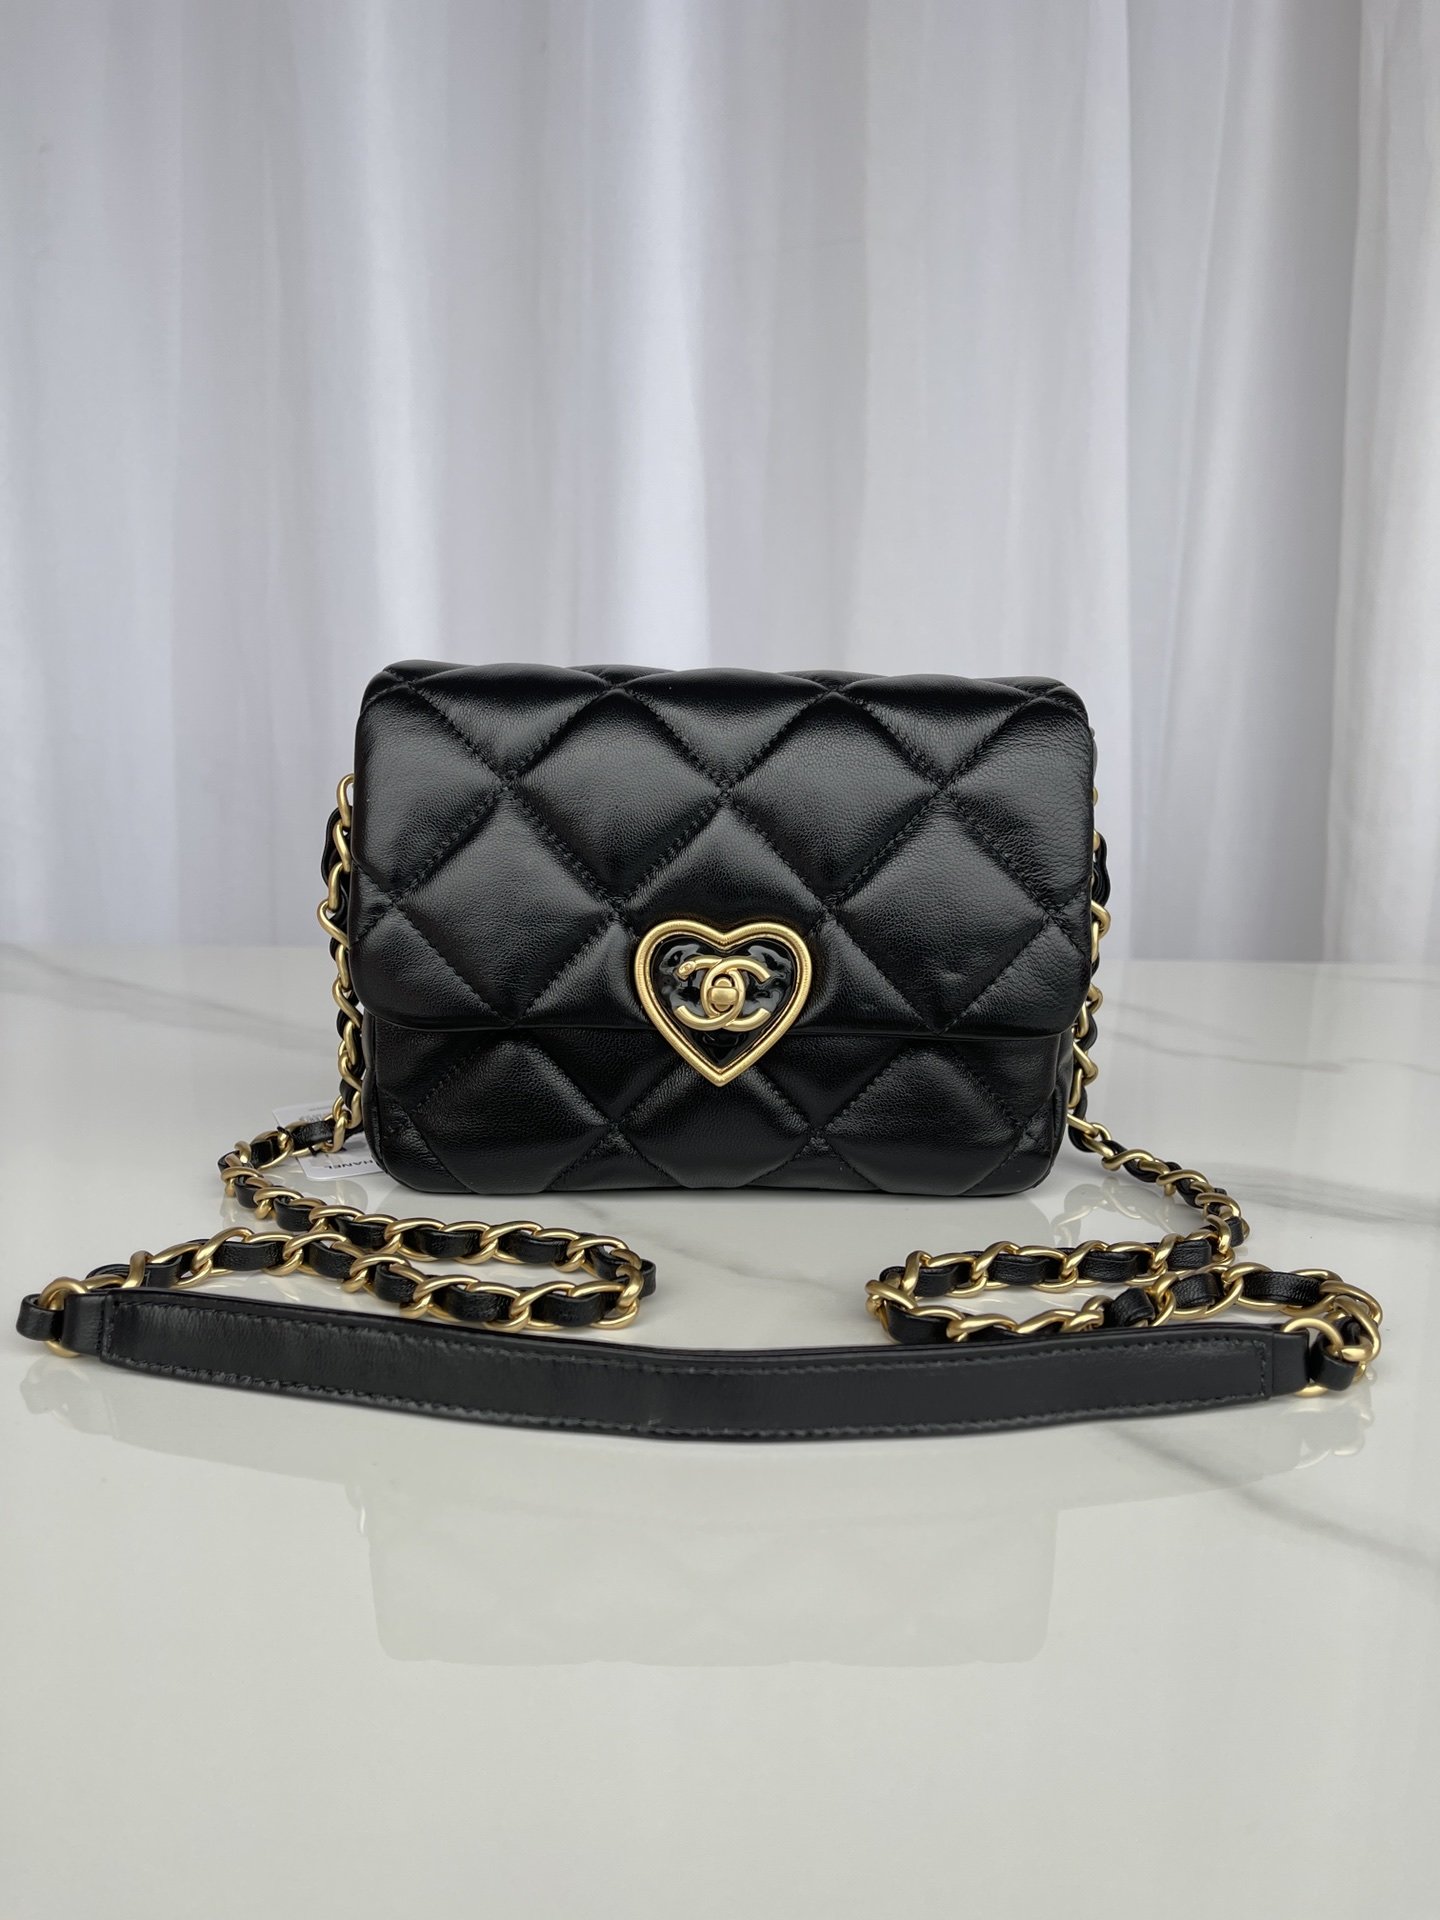 A bag Mini Flap Bag AS3979 18 cm, black